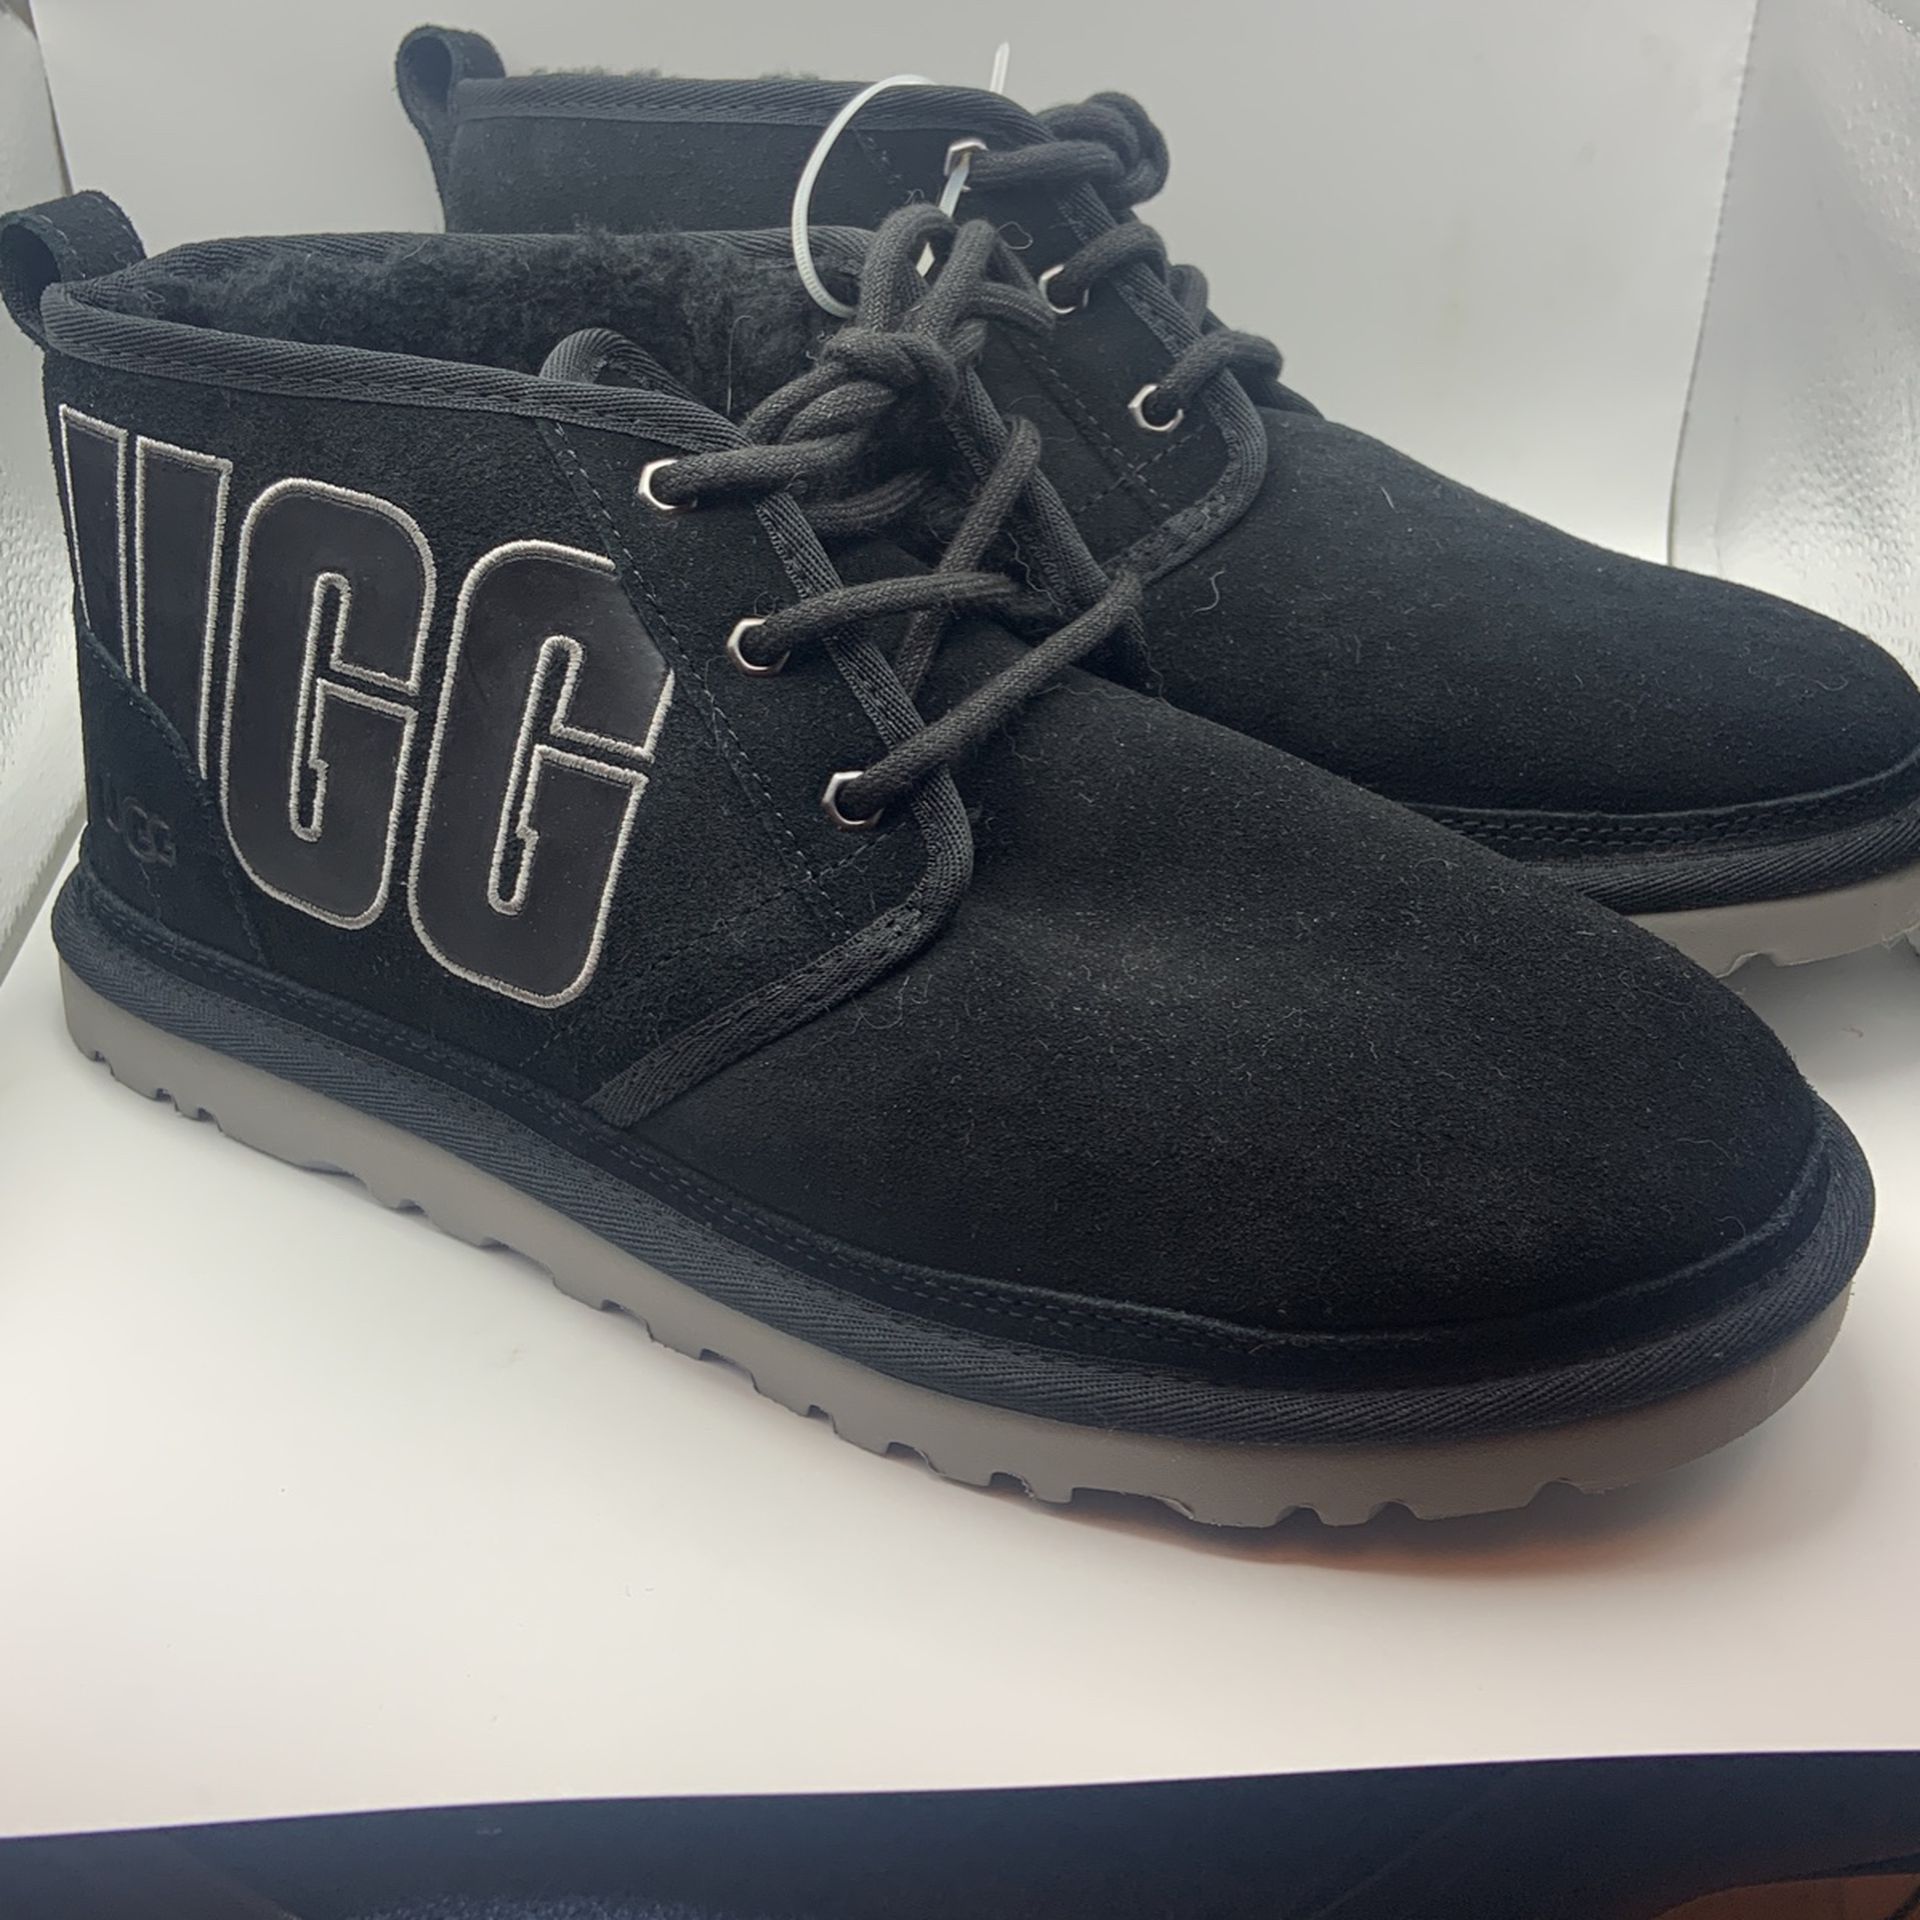 Ugg New Black Boots Men Leather Suede Lamb Fur